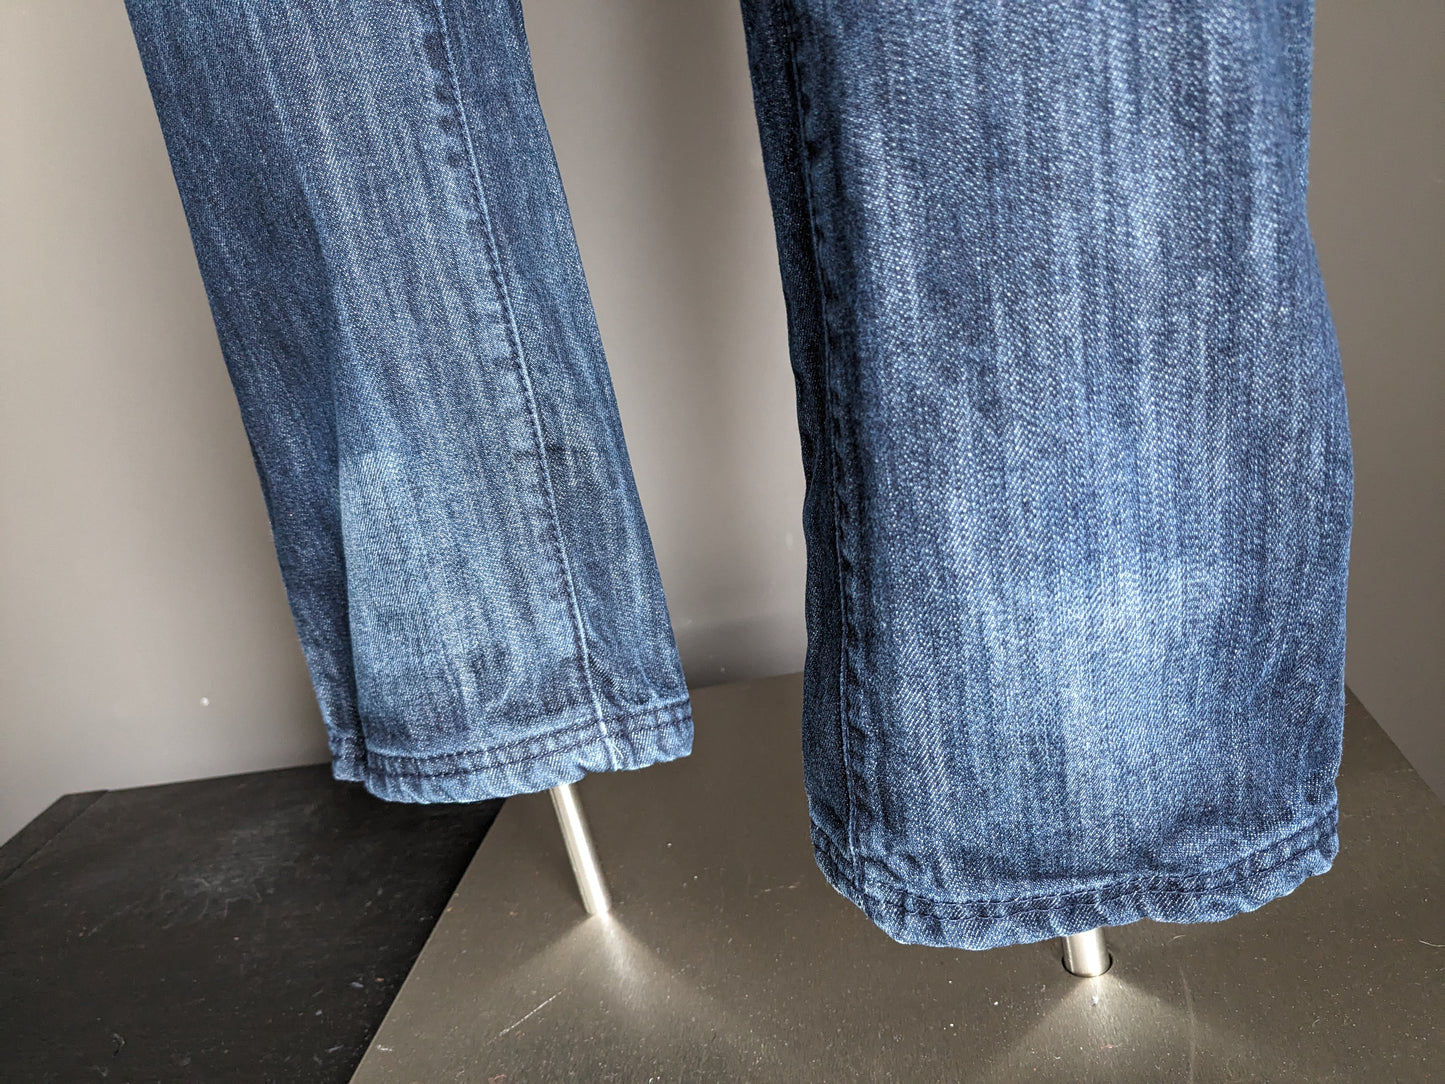 Jeans hechos. Color azul oscuro. Tamaño W32 - L34.